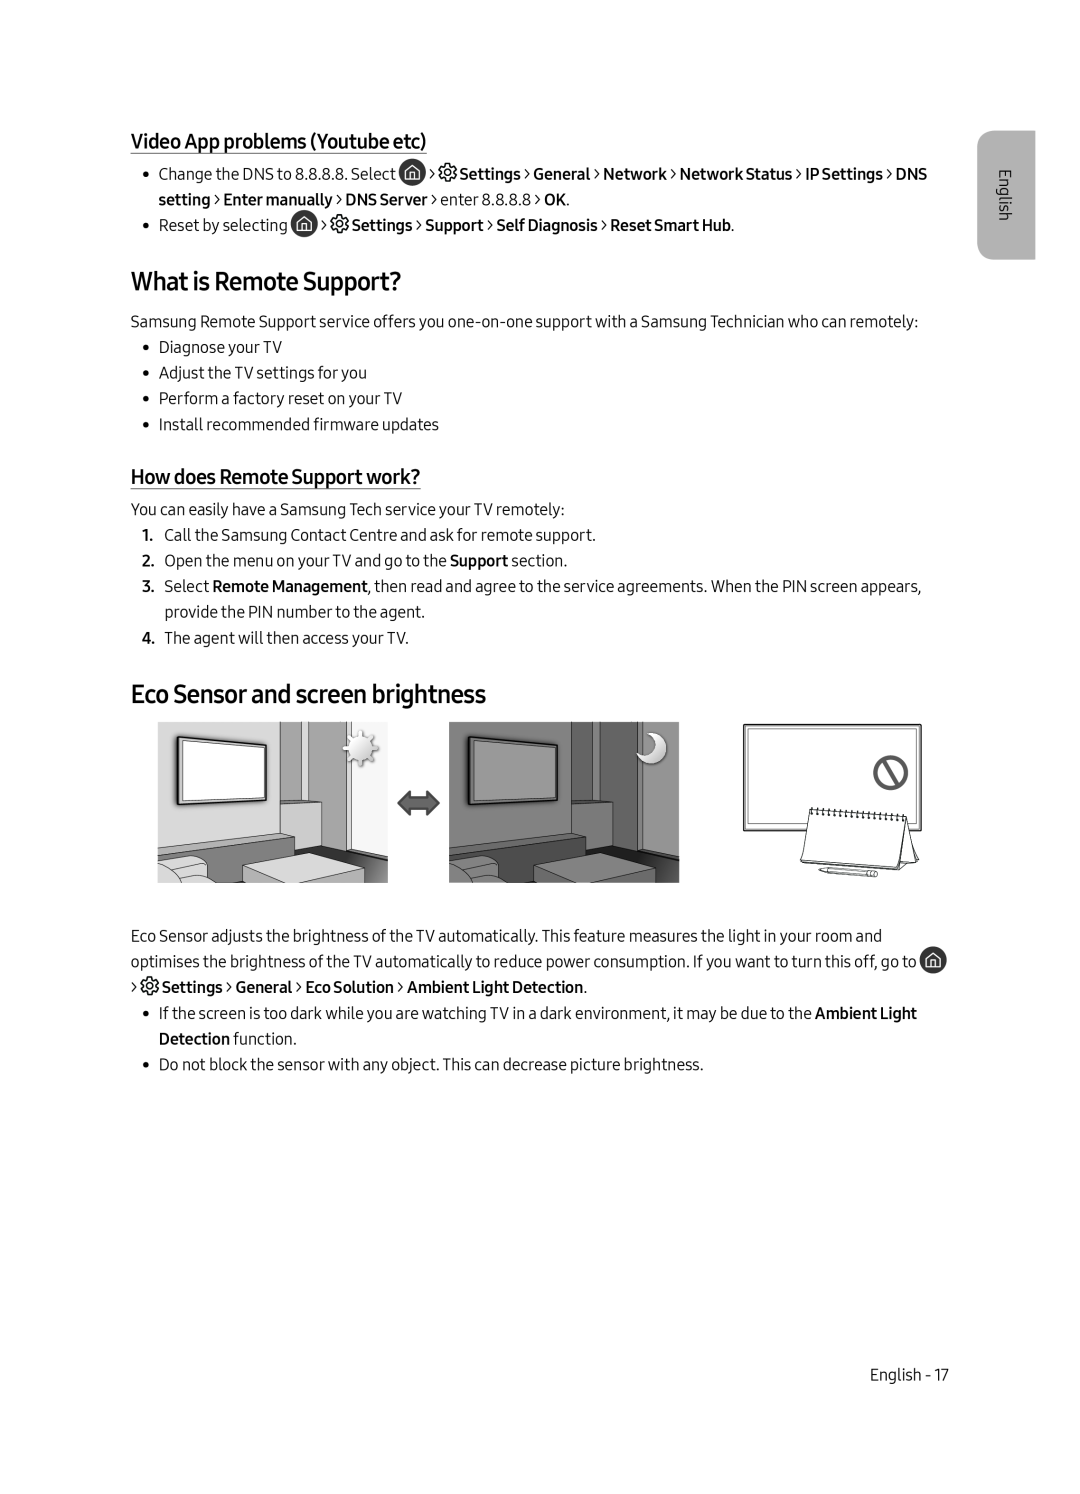 Samsung UE55MU7000TXXU manual What is Remote Support?, Eco Sensor and screen brightness, Video App problems Youtube etc 